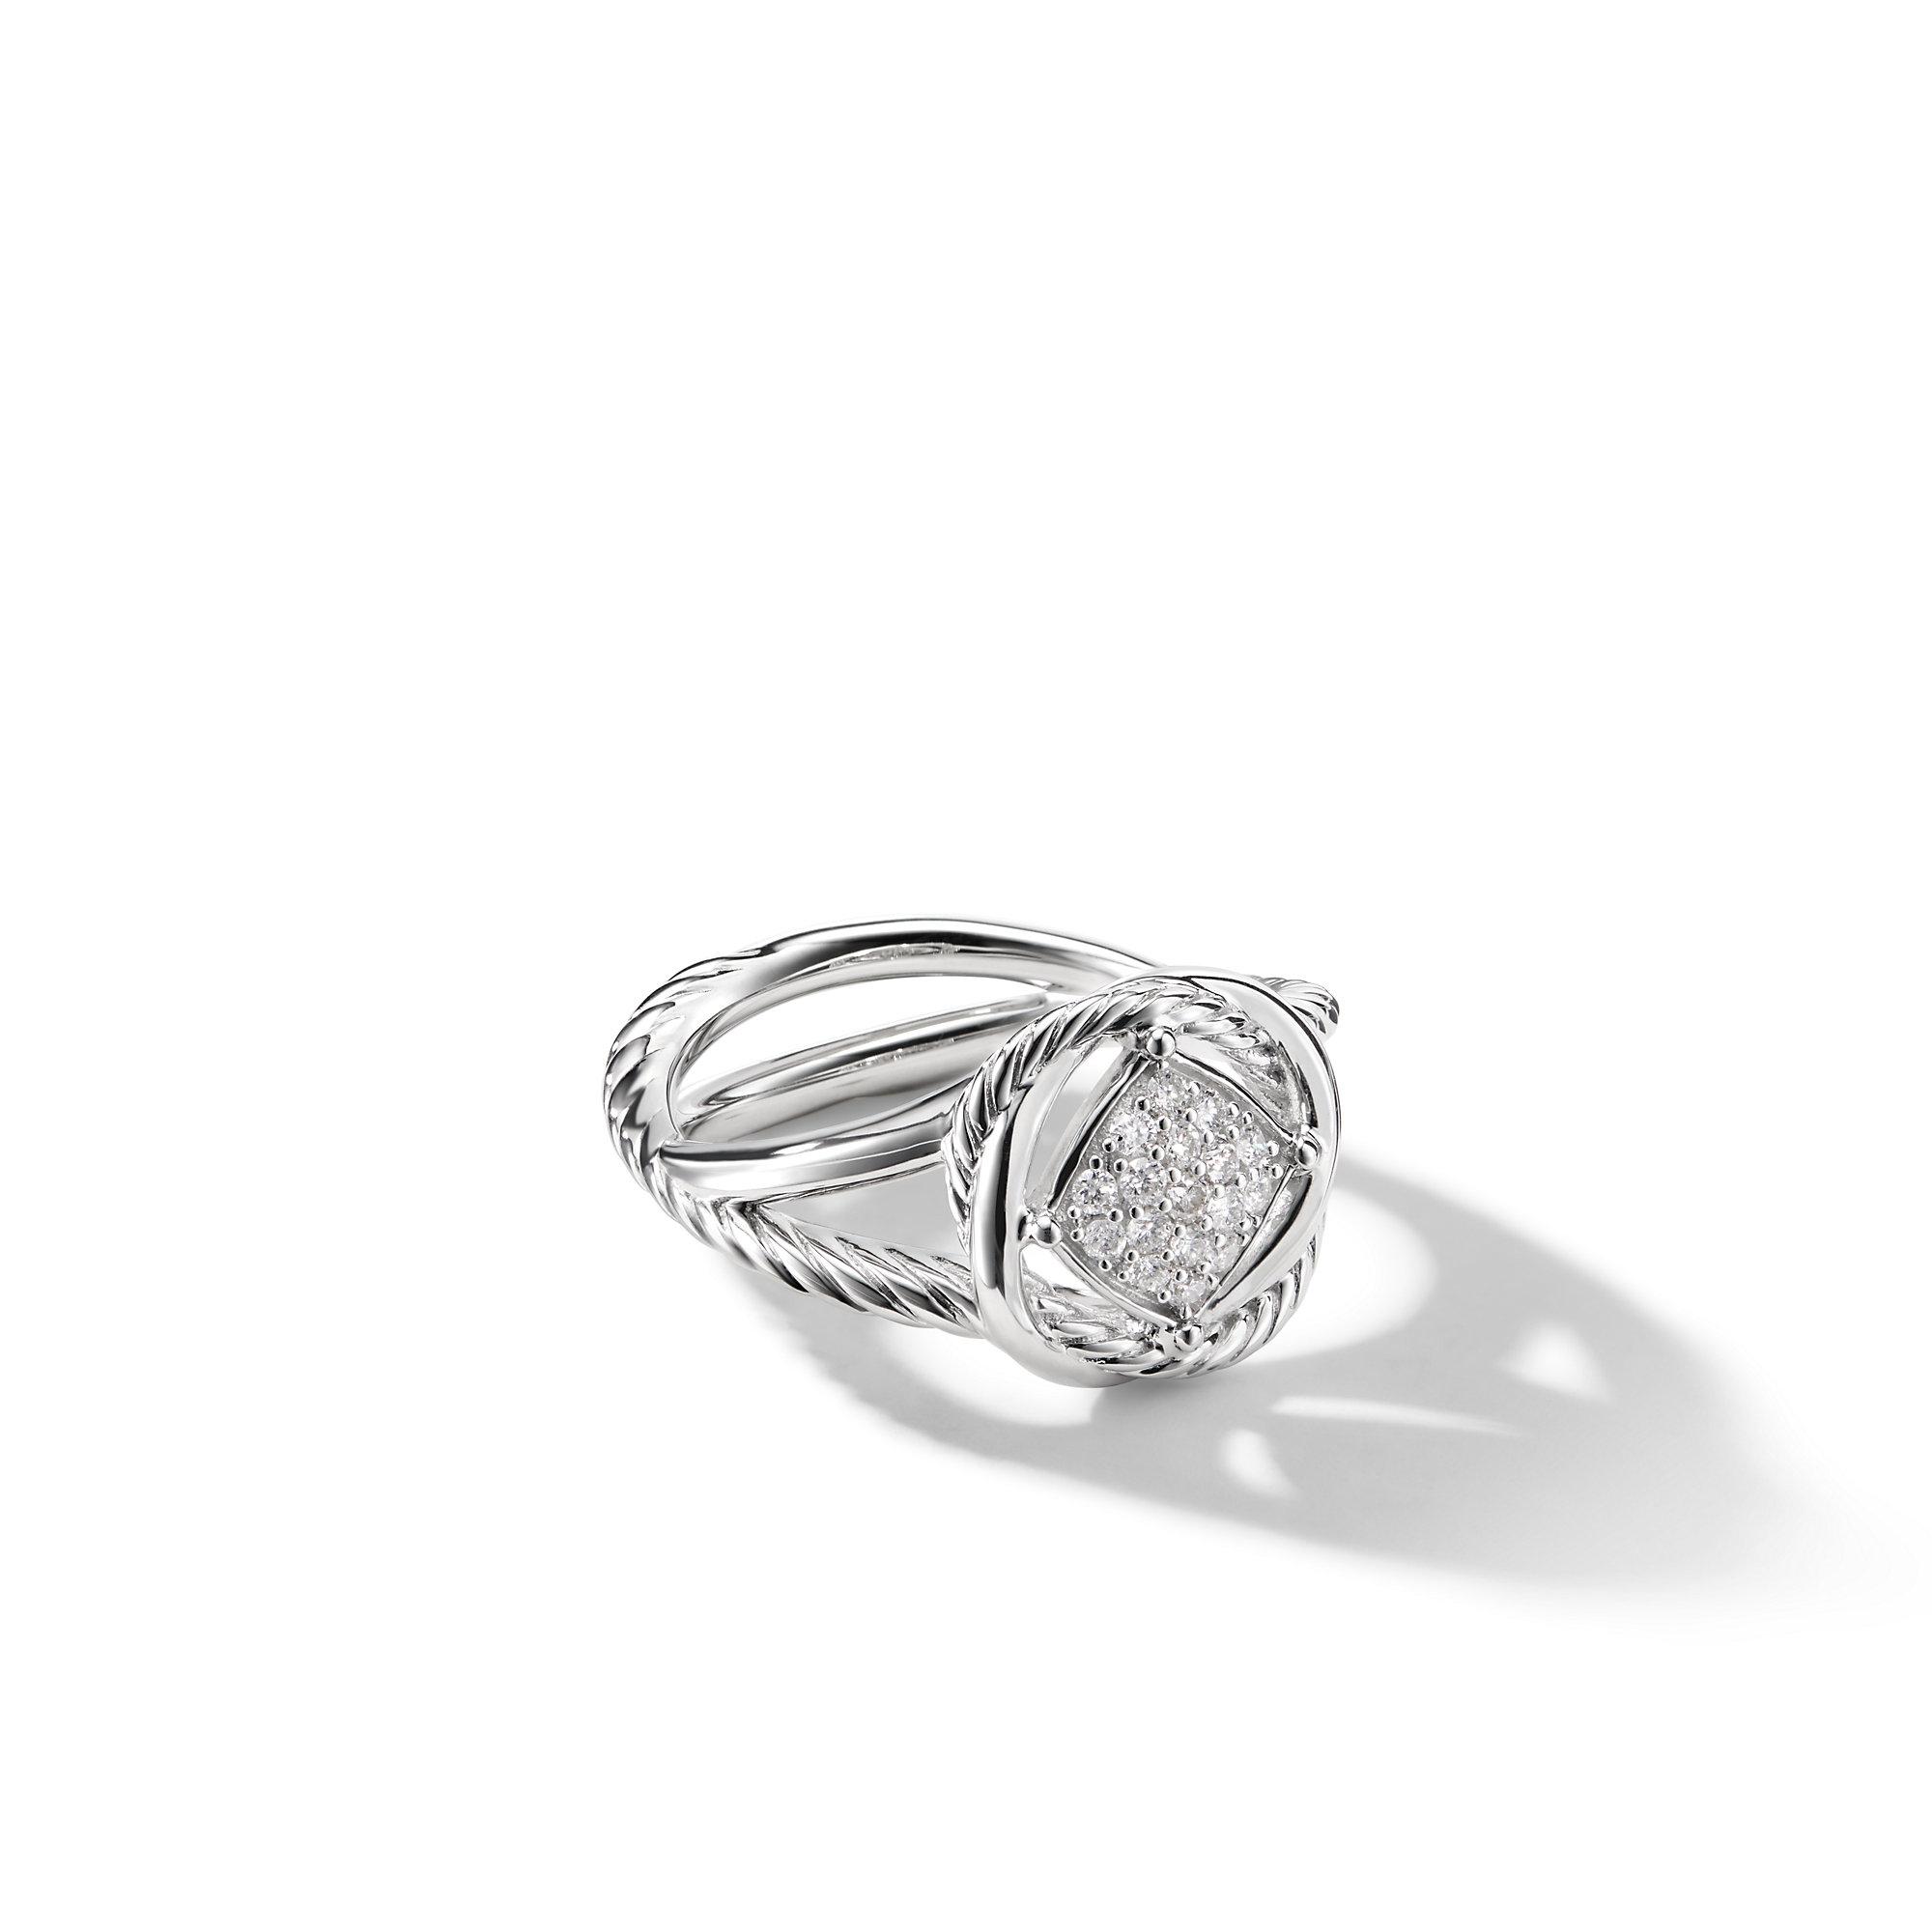 David Yurman Infinity Ring with Diamonds, size 6